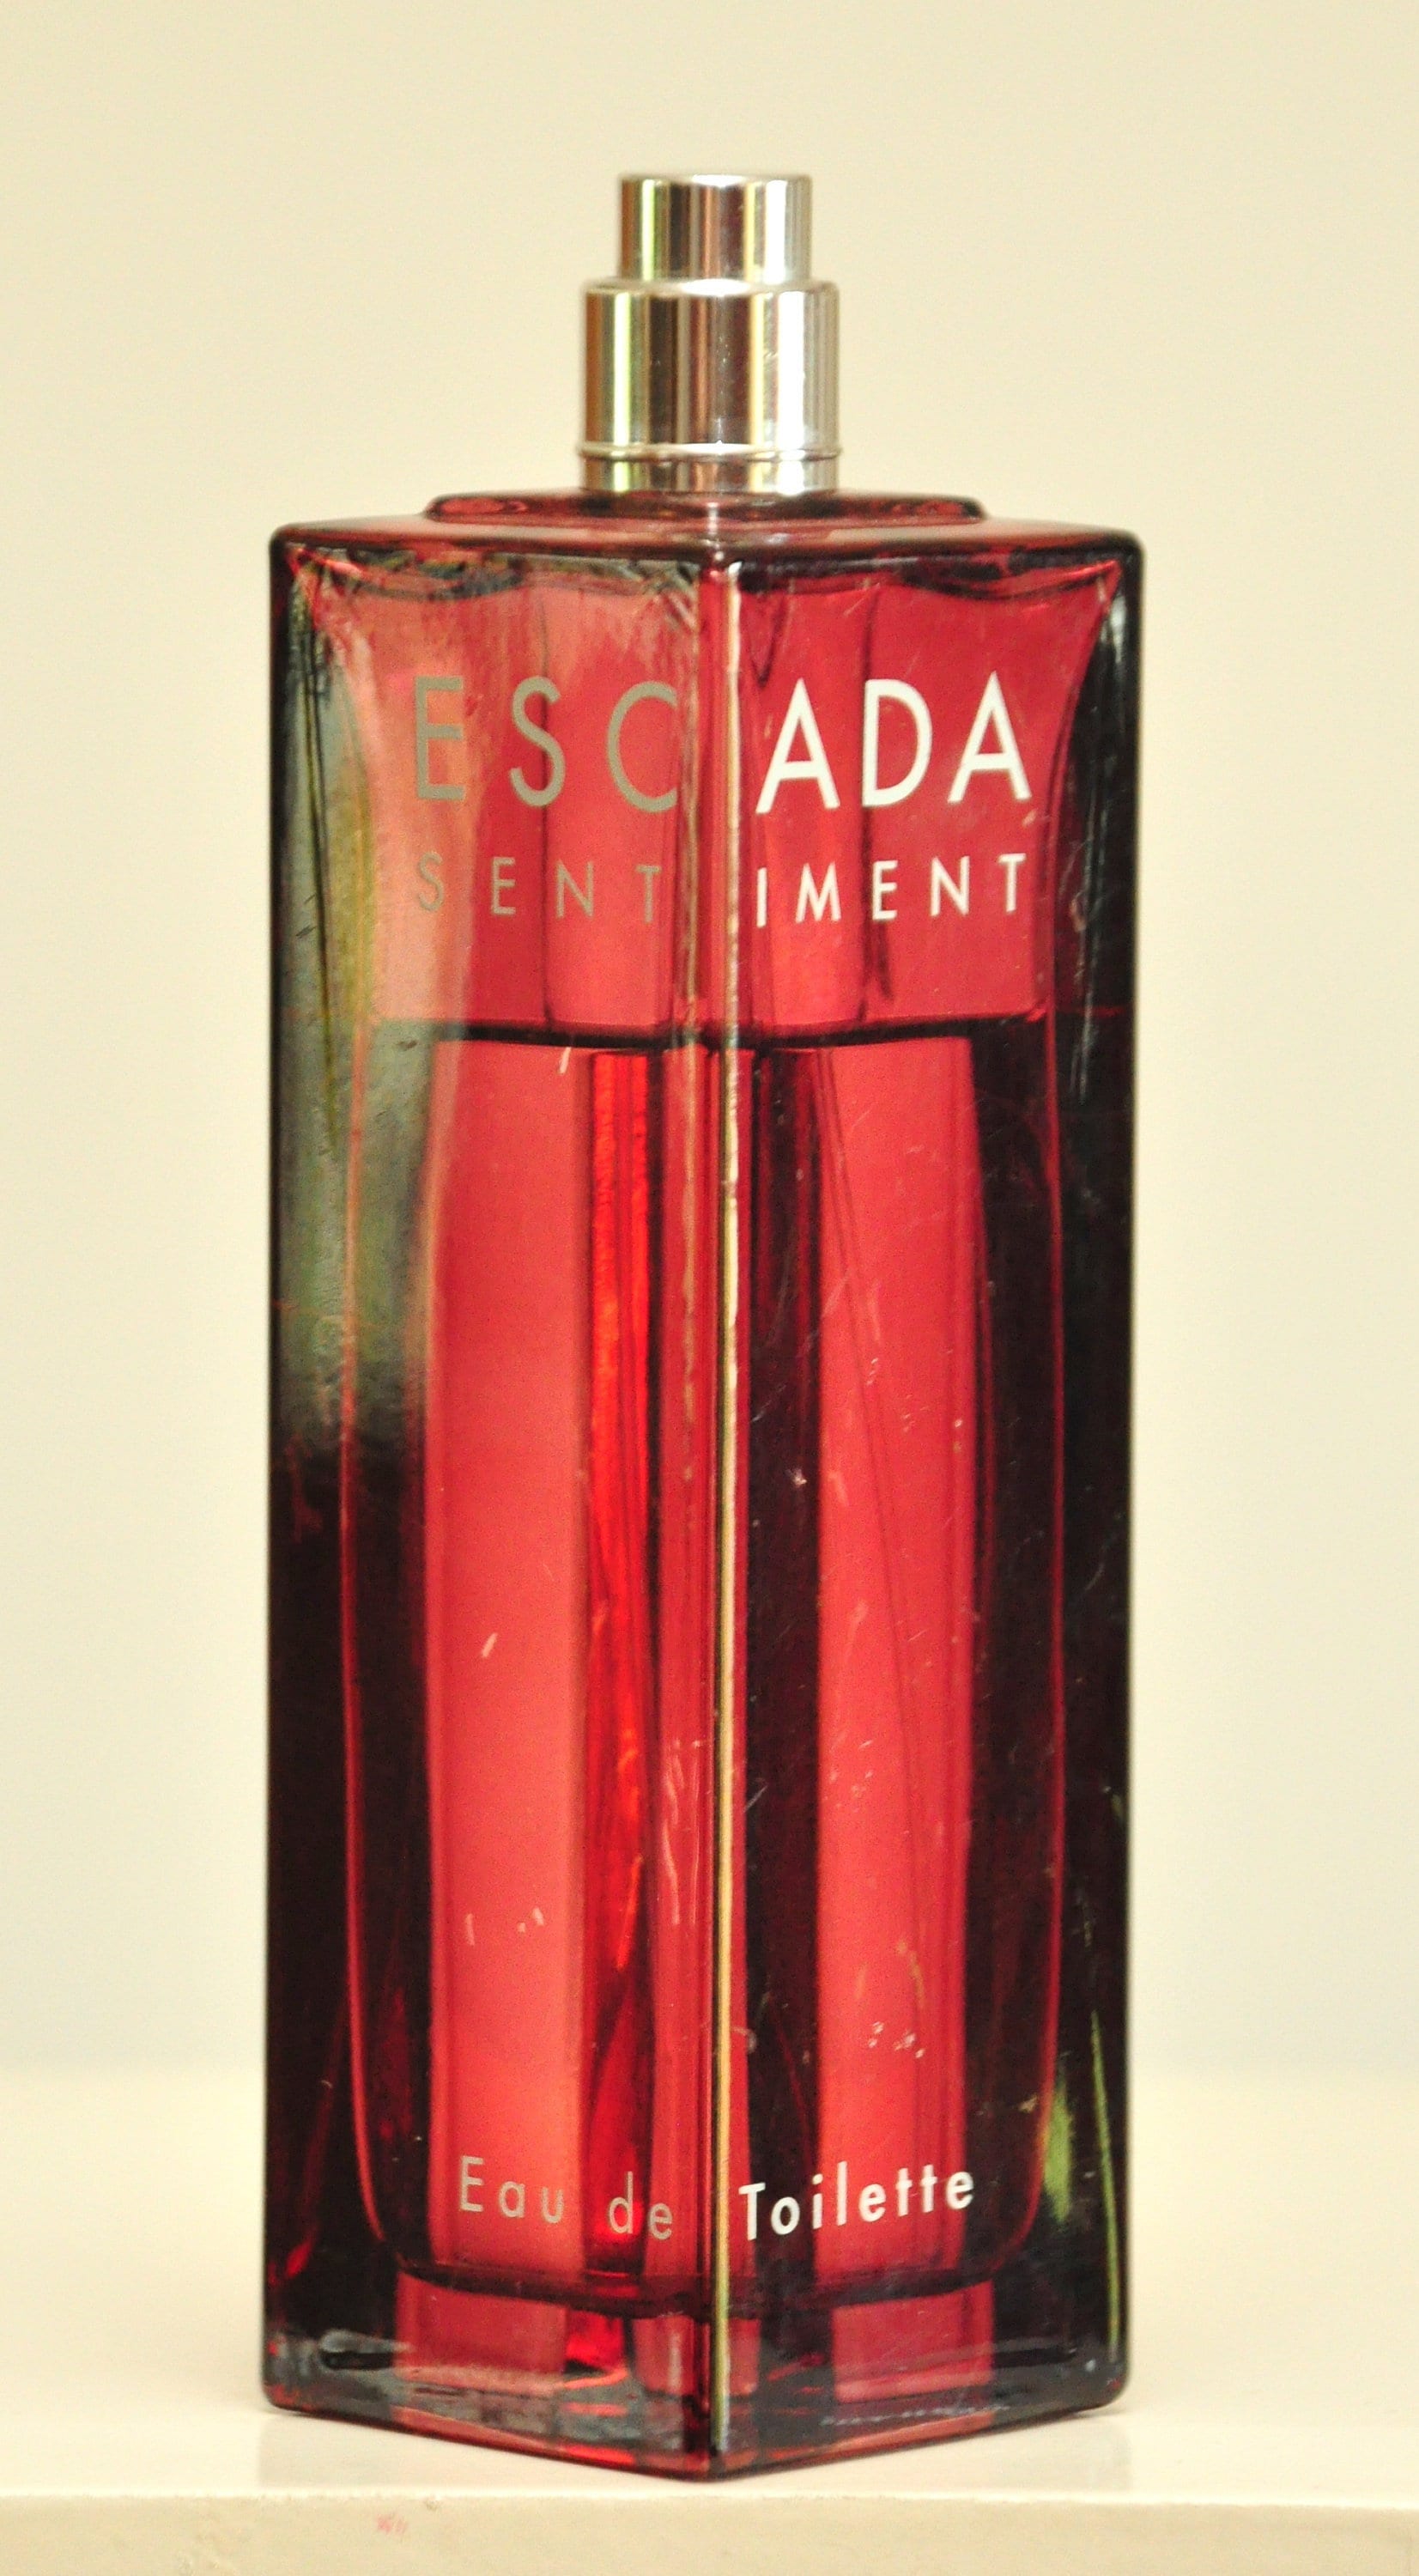 Escada Sentiment pour Homme di Escada Eau deToilette Edt 100ml 3.4 Fl. Oz.  Spray Perfume Man Rare Vintage